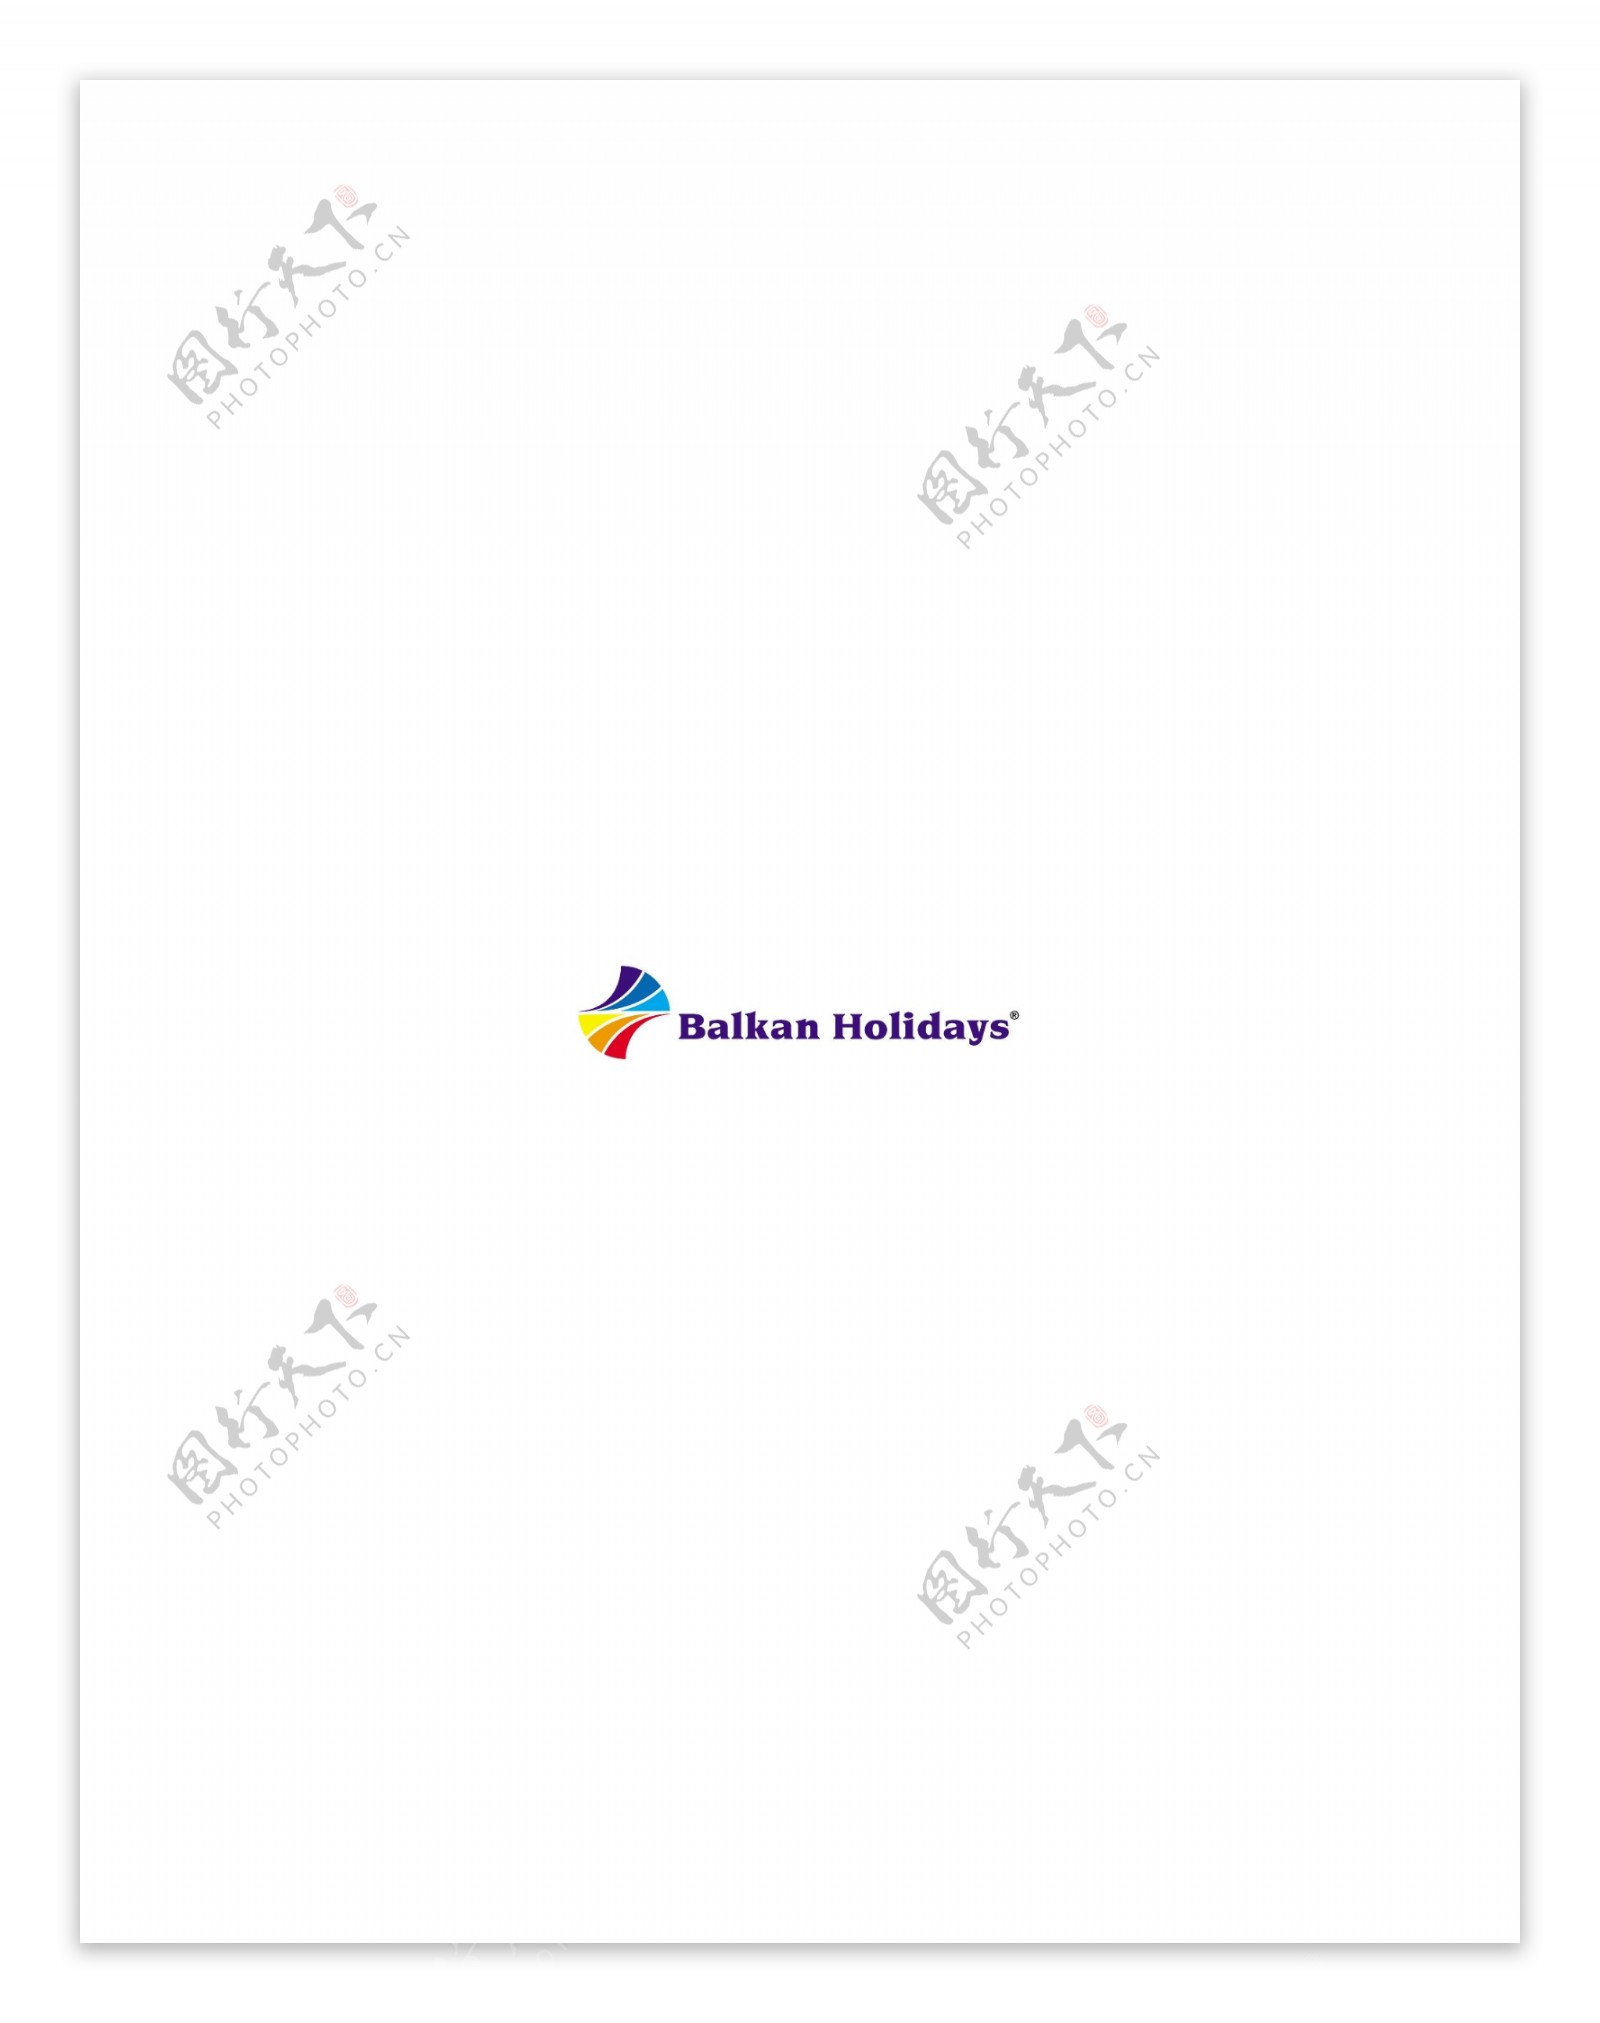 BalkanHolidayslogo设计欣赏传统企业标志BalkanHolidays下载标志设计欣赏